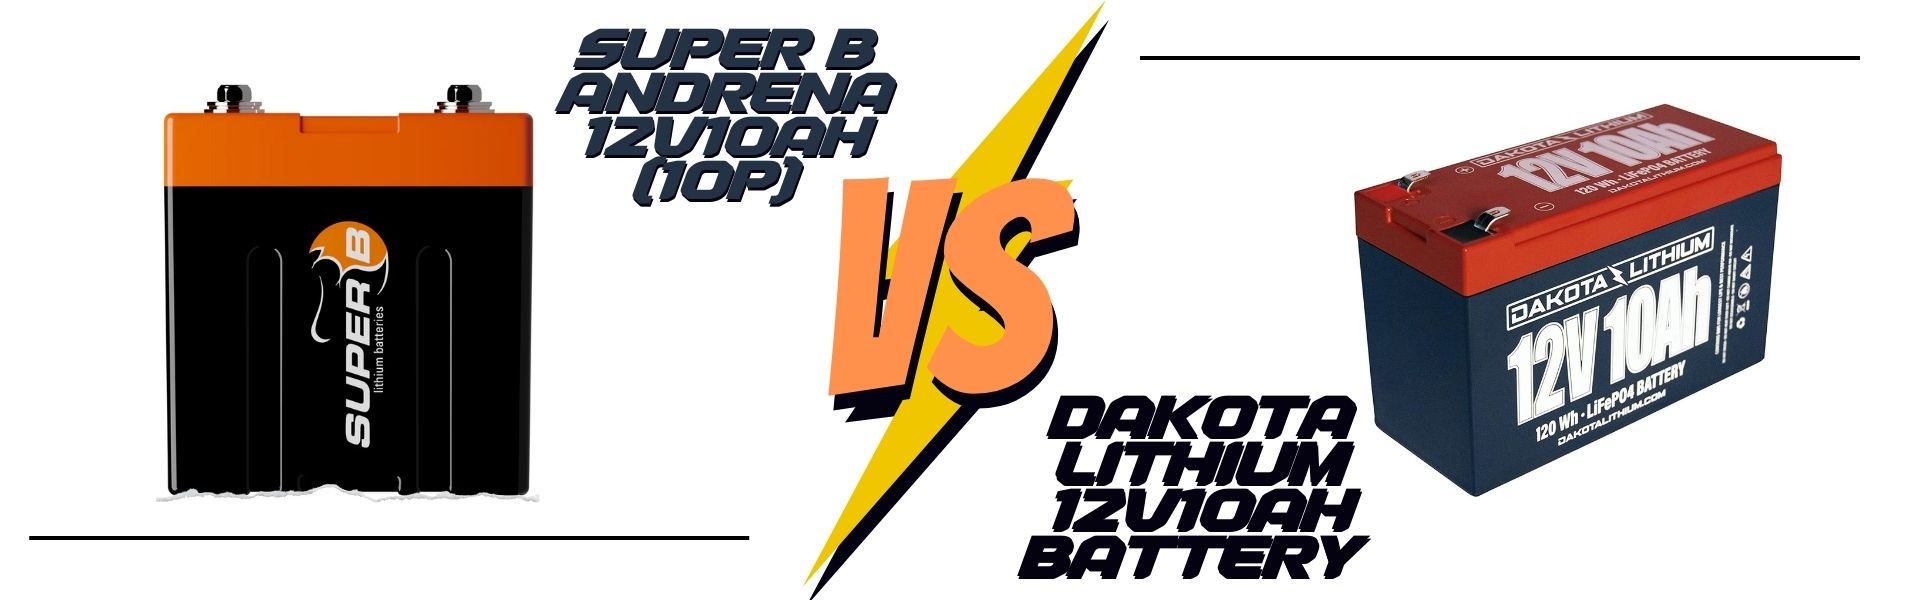 Super B Andrena 12V10AH (10P) vs Dakota Lithium 12V10Ah Battery – A Comprehensive Comparison Guide